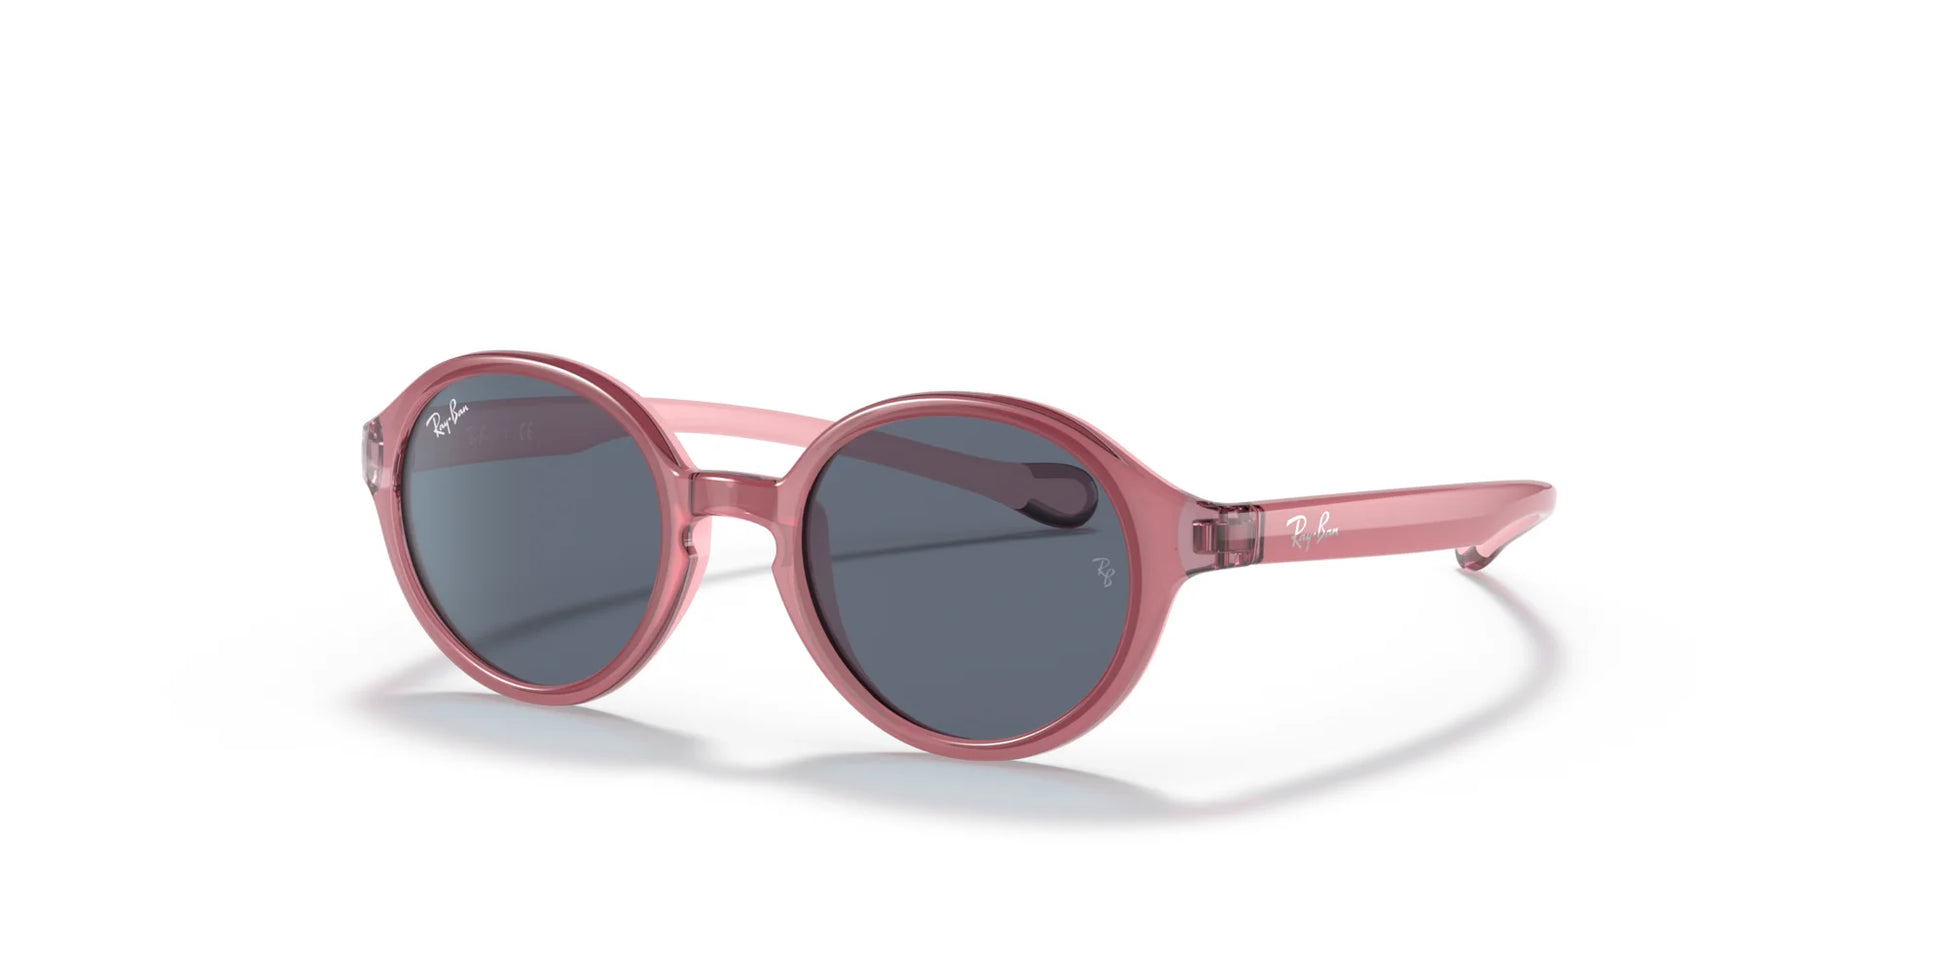 Ray-Ban RJ9075S Sunglasses Fuchsia On Pink / Dark Grey